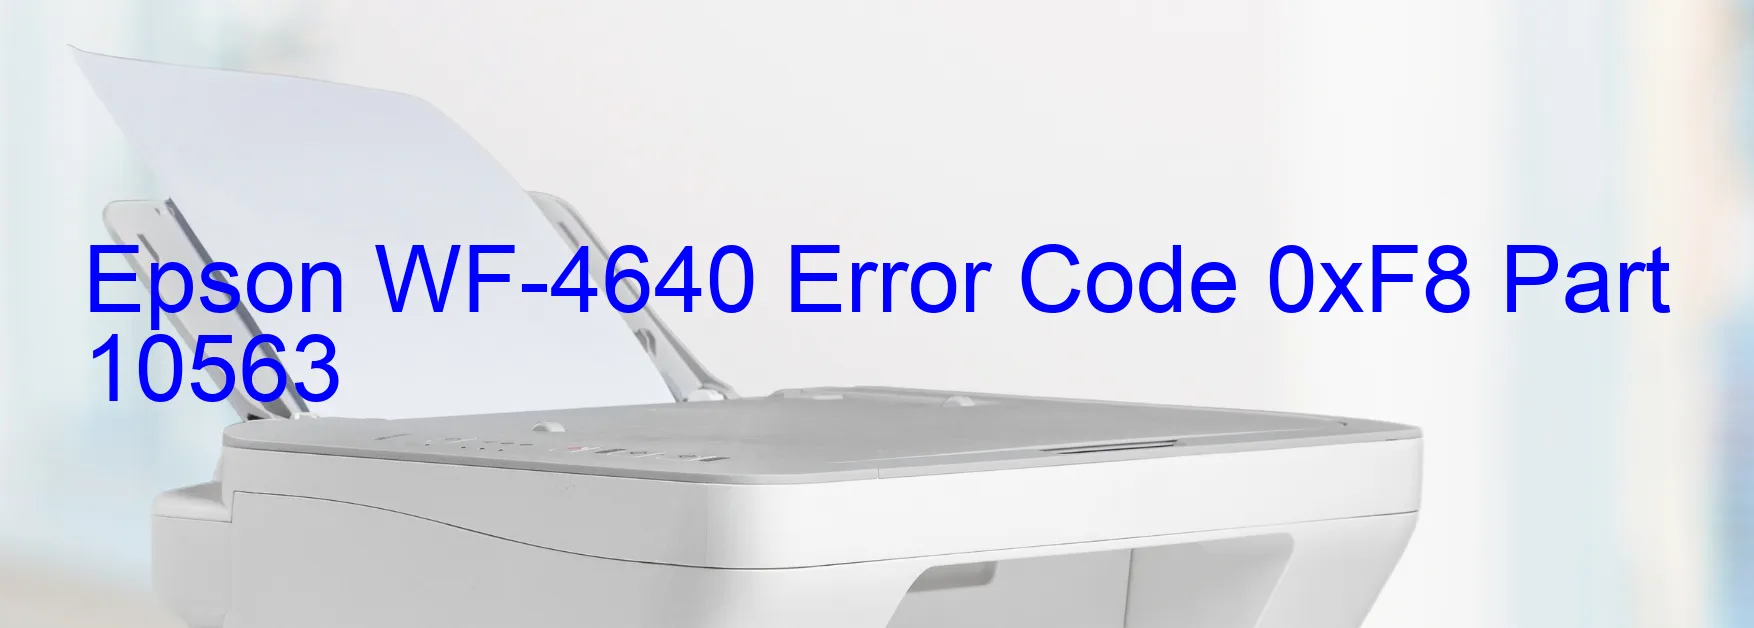 Epson WF-4640 Error Code 0xF8 Part 10563